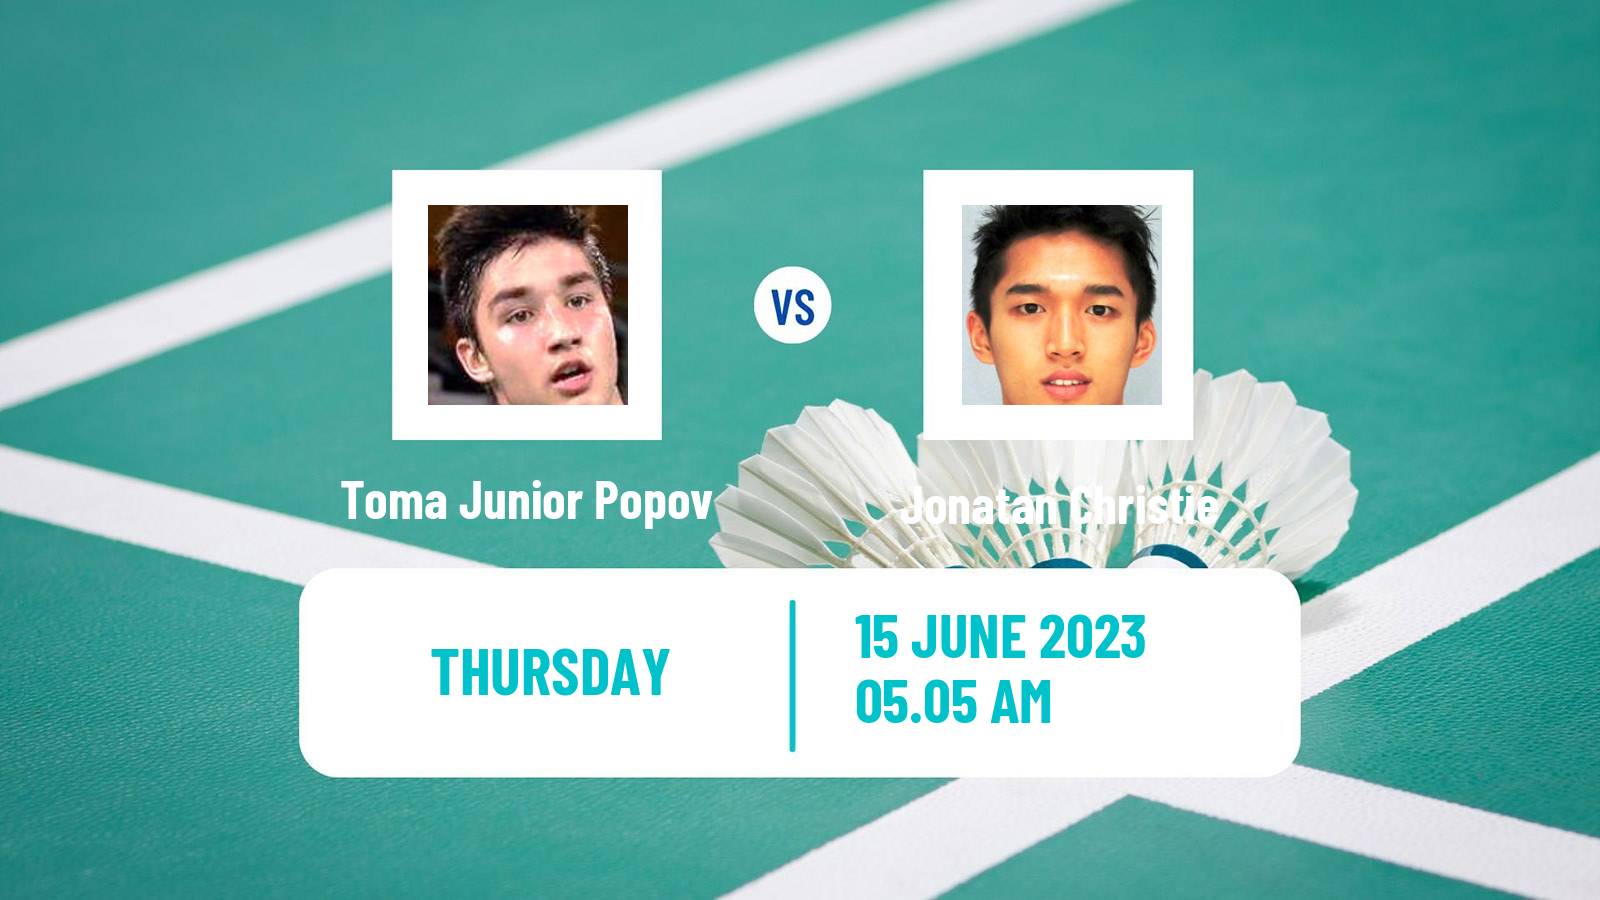 Badminton BWF World Tour Indonesia Open Men Toma Junior Popov - Jonatan Christie